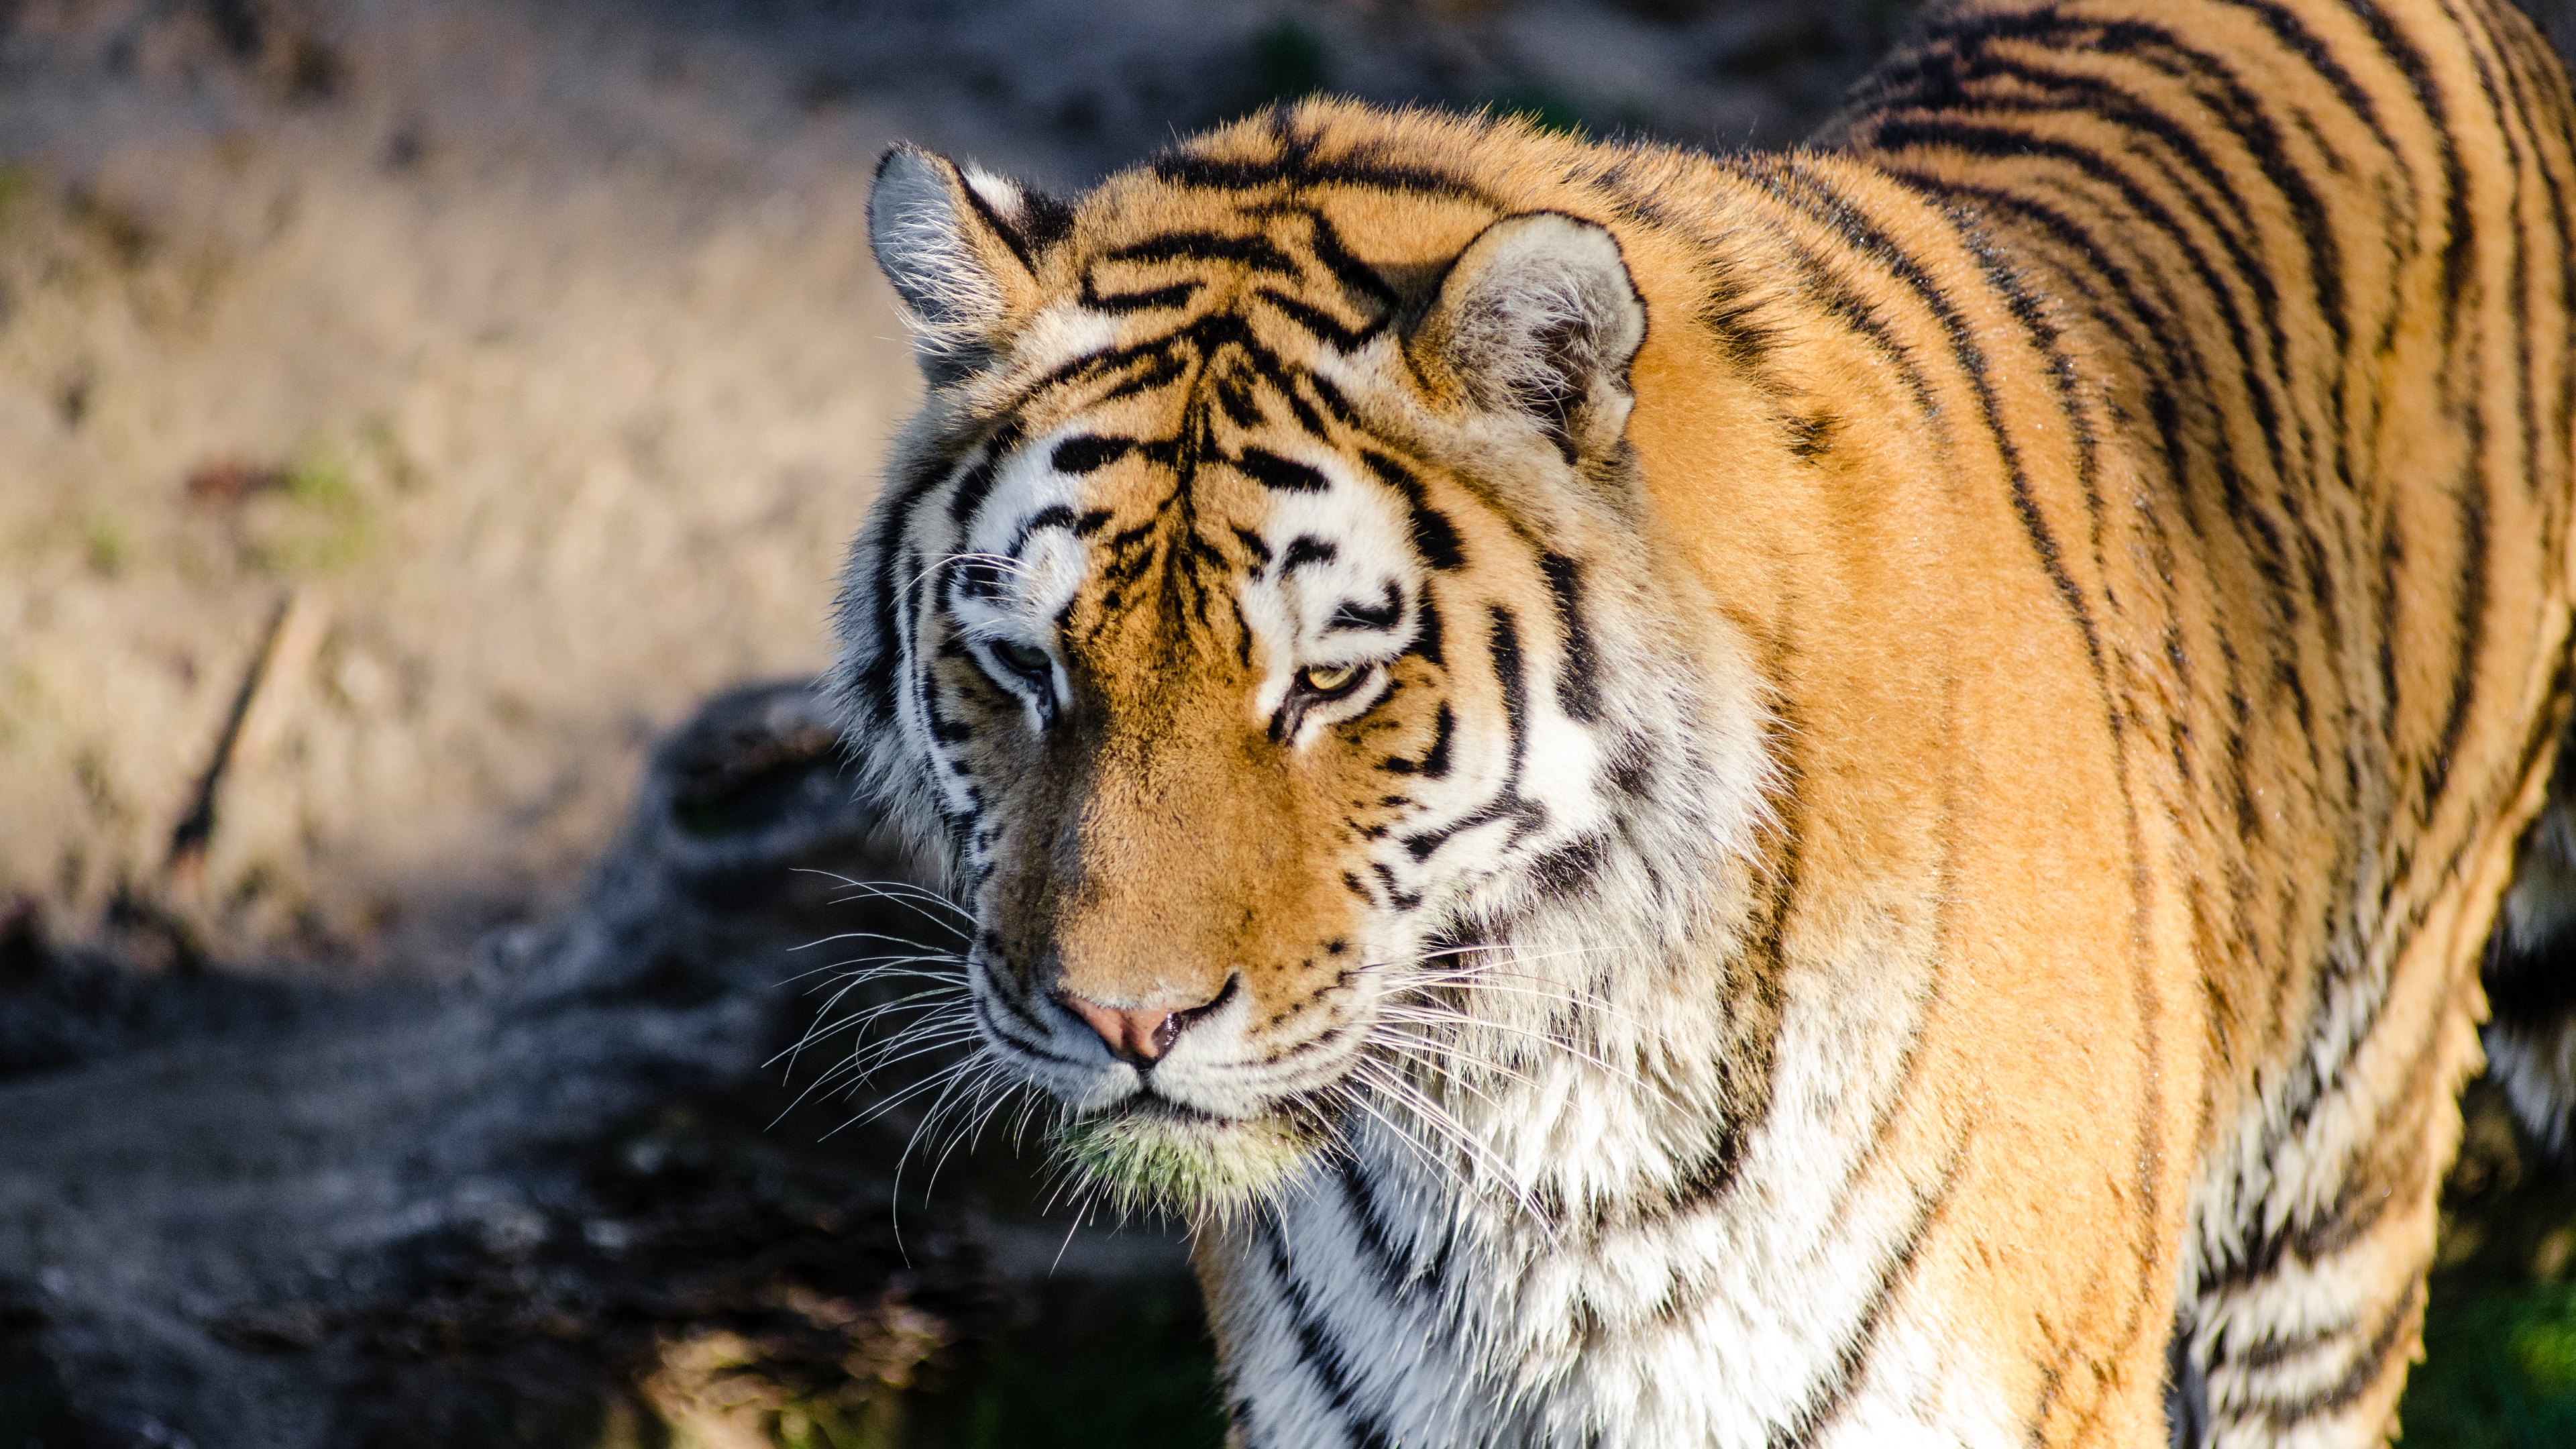 Siberian Tiger 4k Ultra HD Wallpaper | Background Image ...